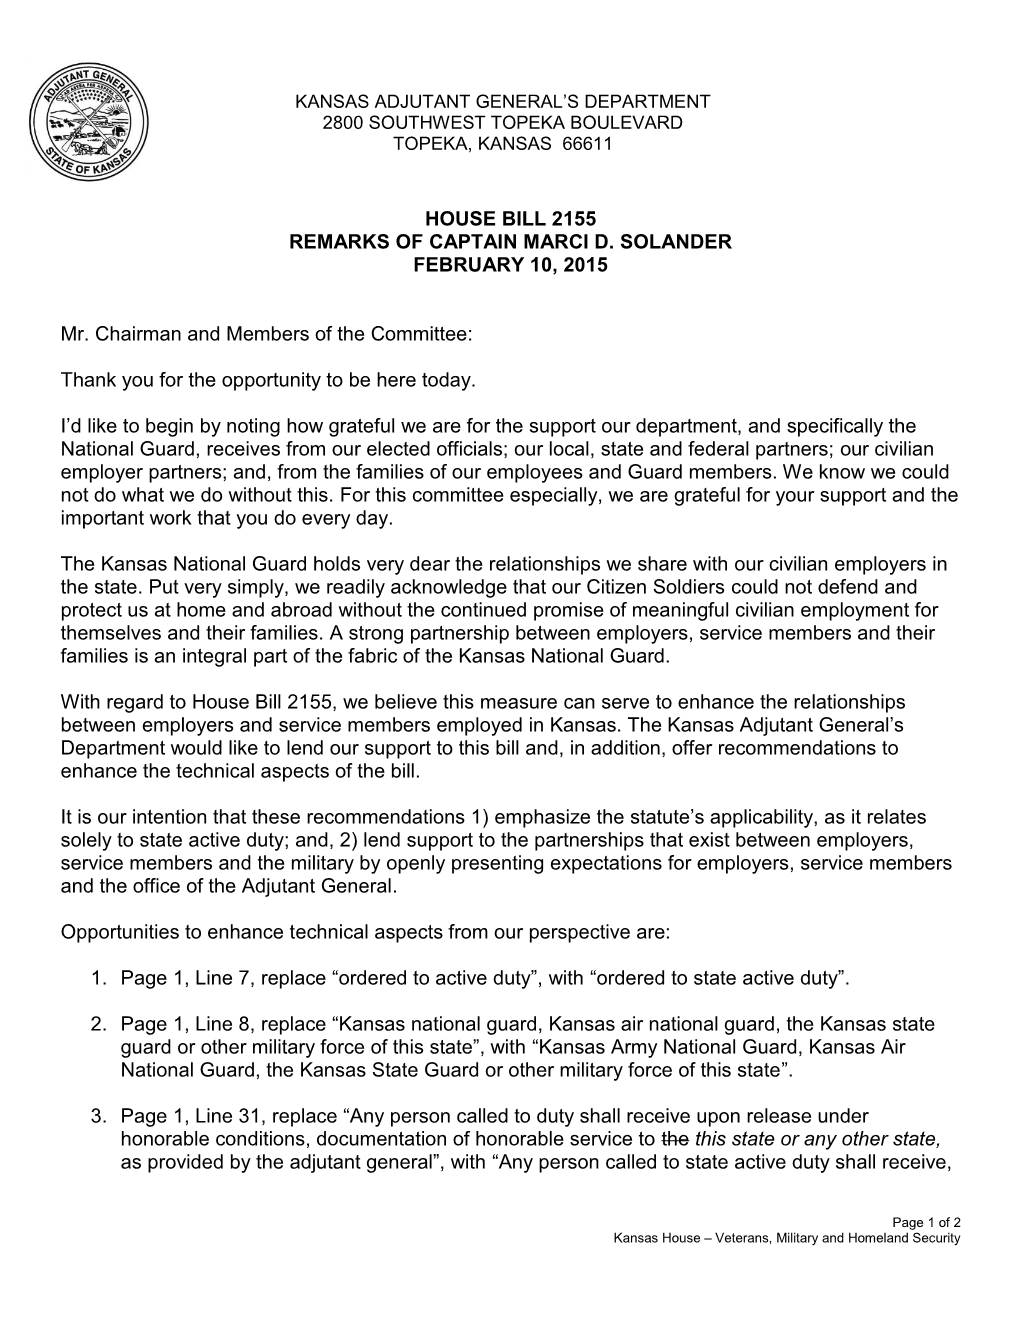 House Bill 2155 Remarks of Captain Marci D. Solander February 10, 2015